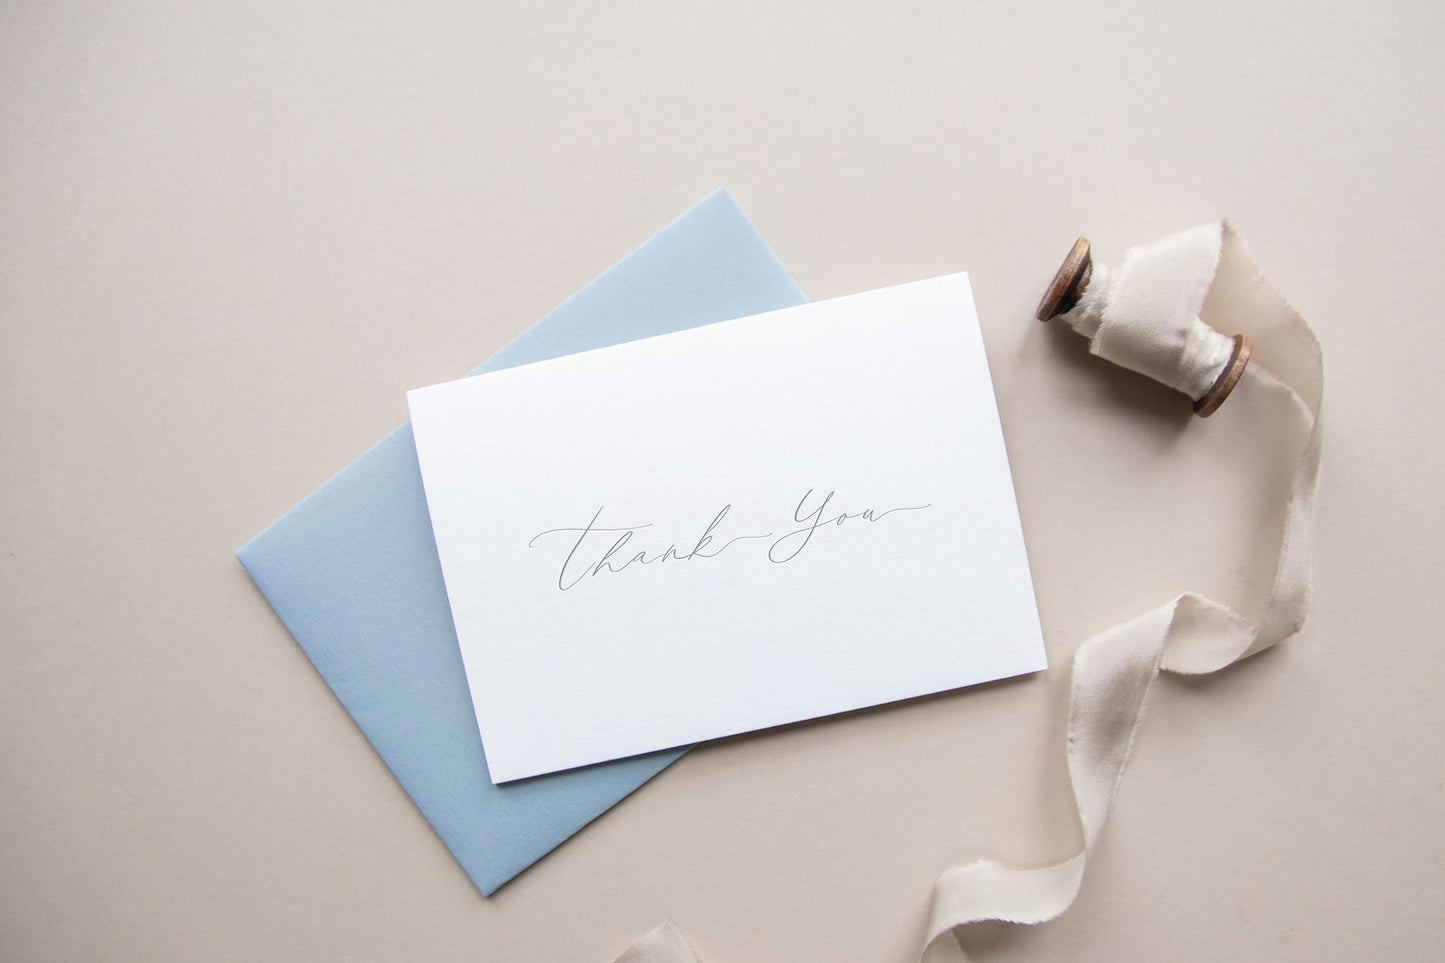 'Thank you' Greeting Card - Light Blue